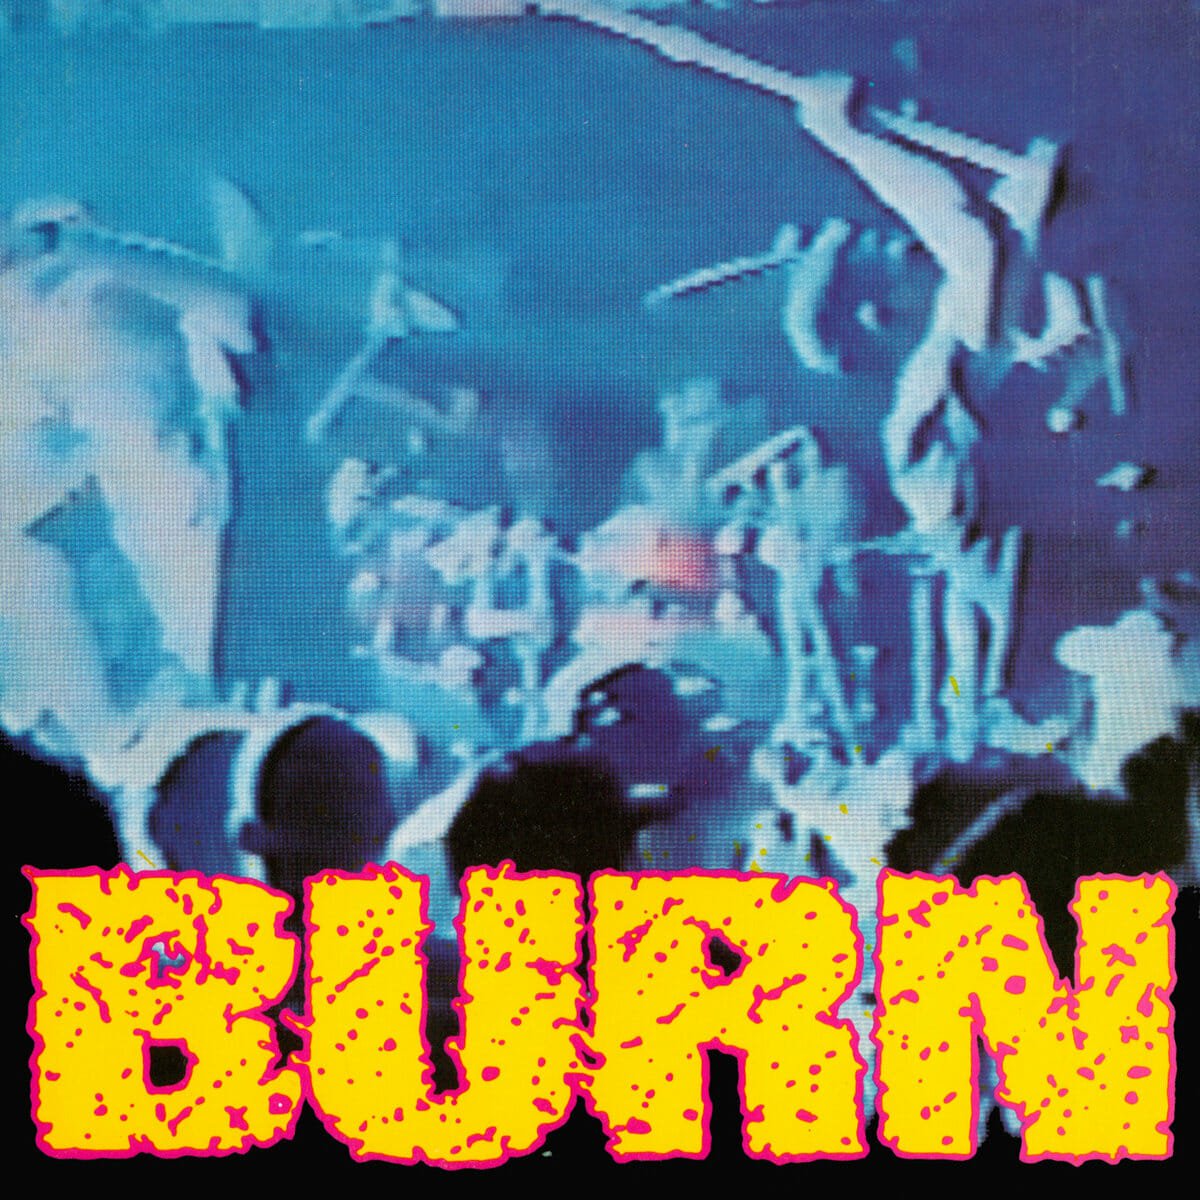 Burn - "Burn"